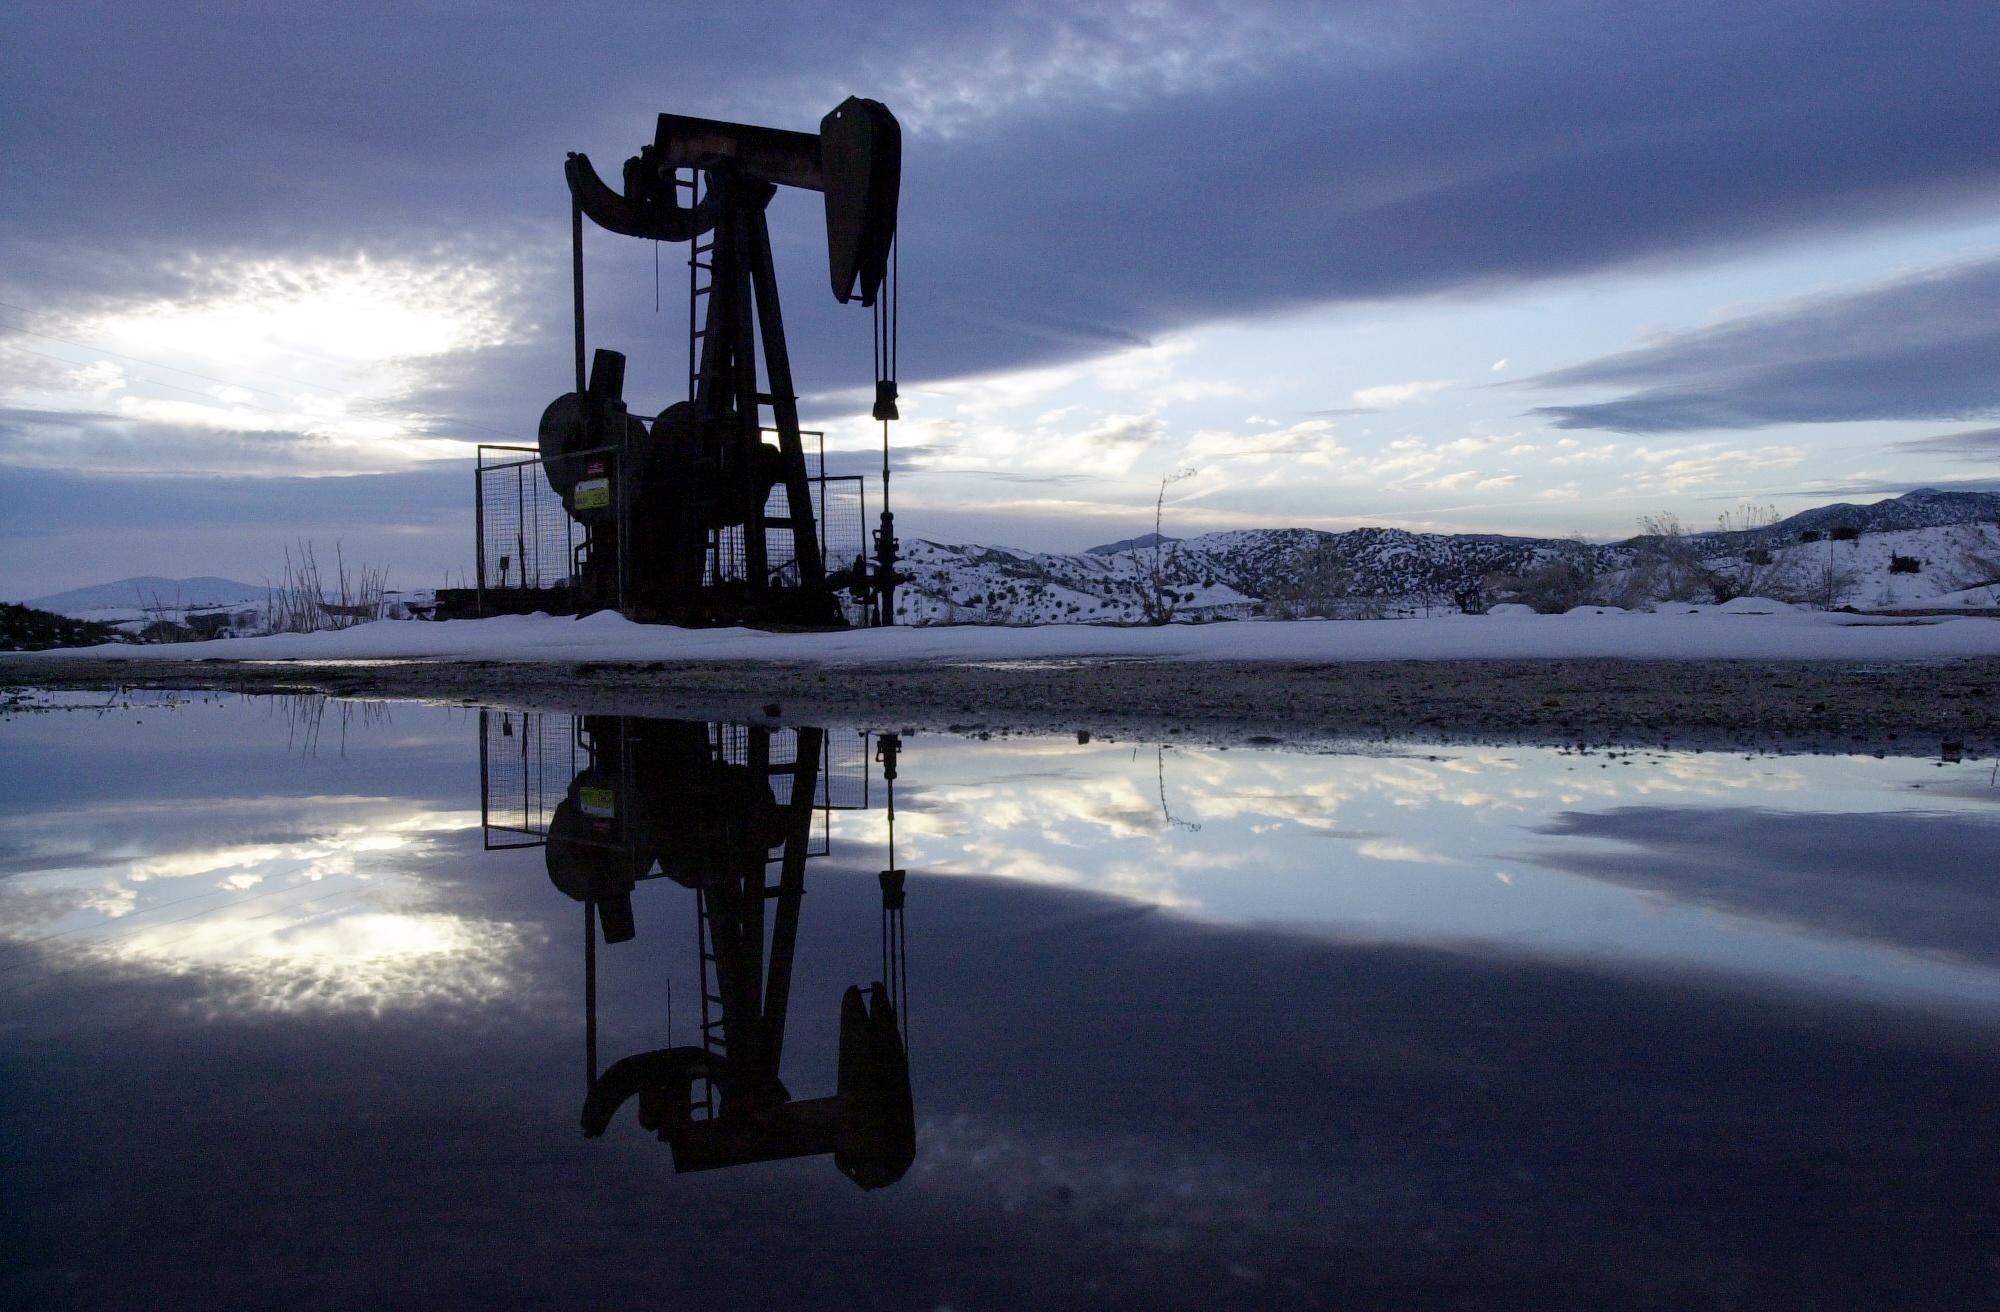 Цена нефти резко выросла почти до 100 долларов за баррель - Экономика